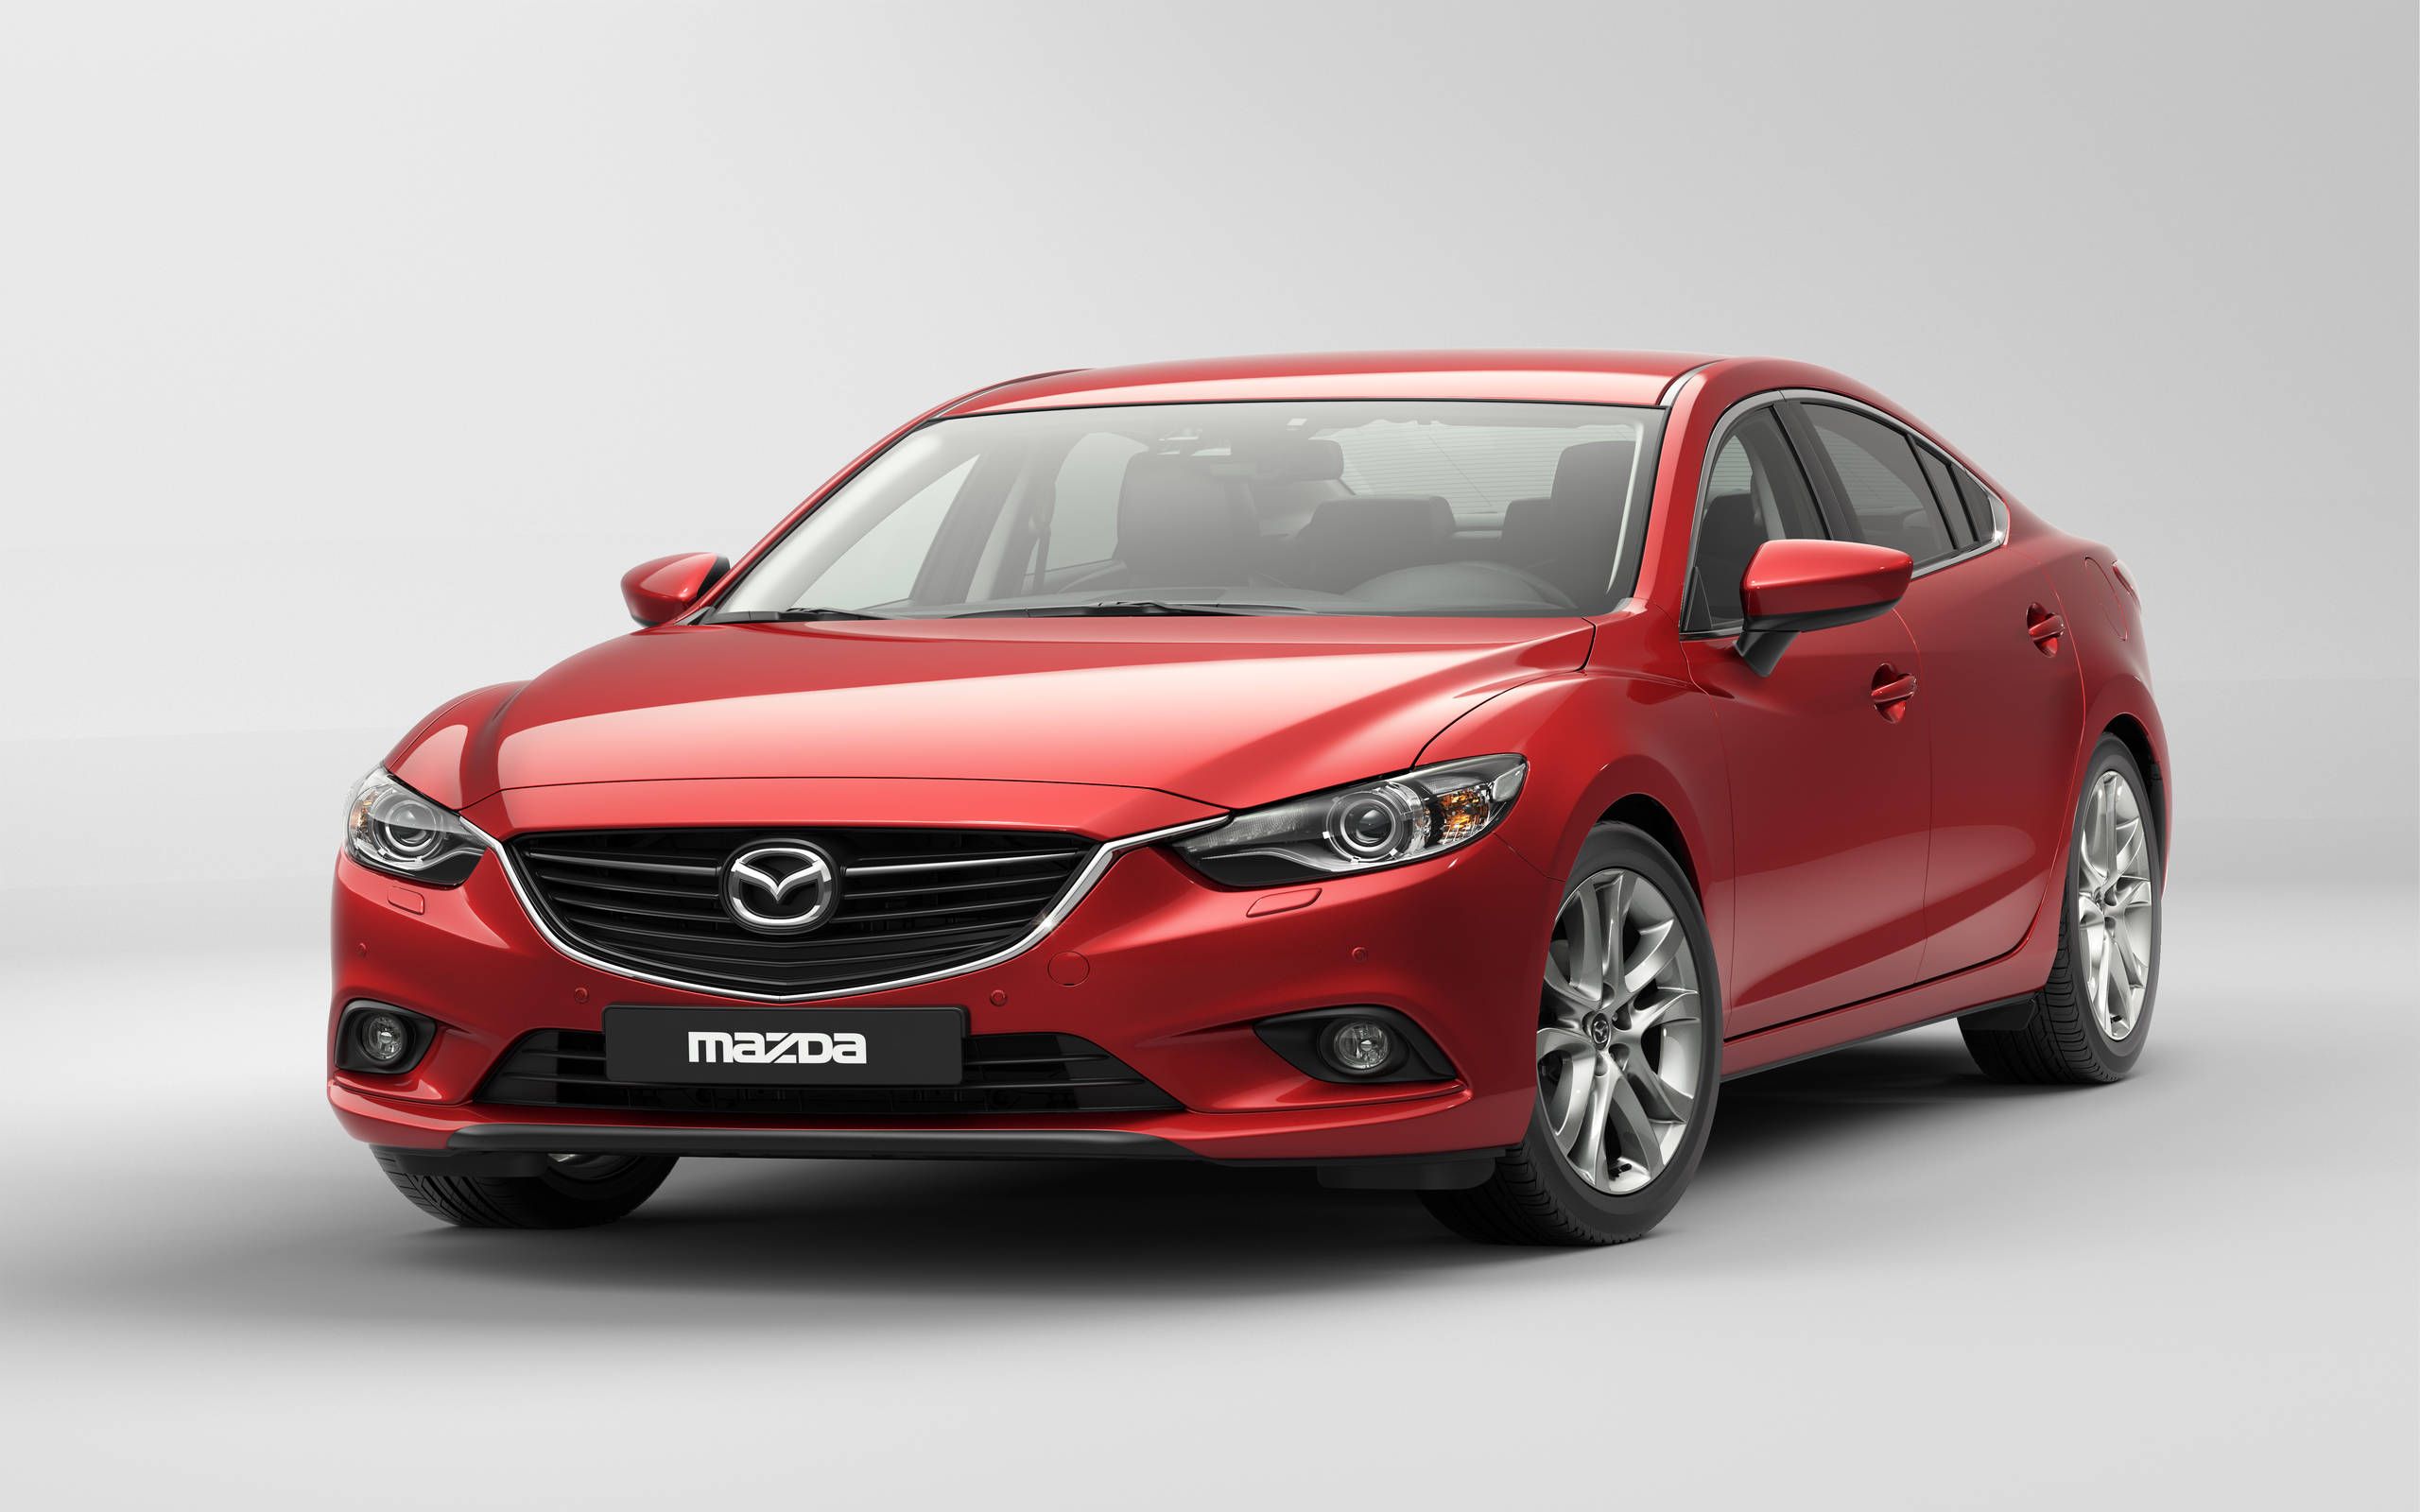 2015 Mazda 6i Grand Touring review notes